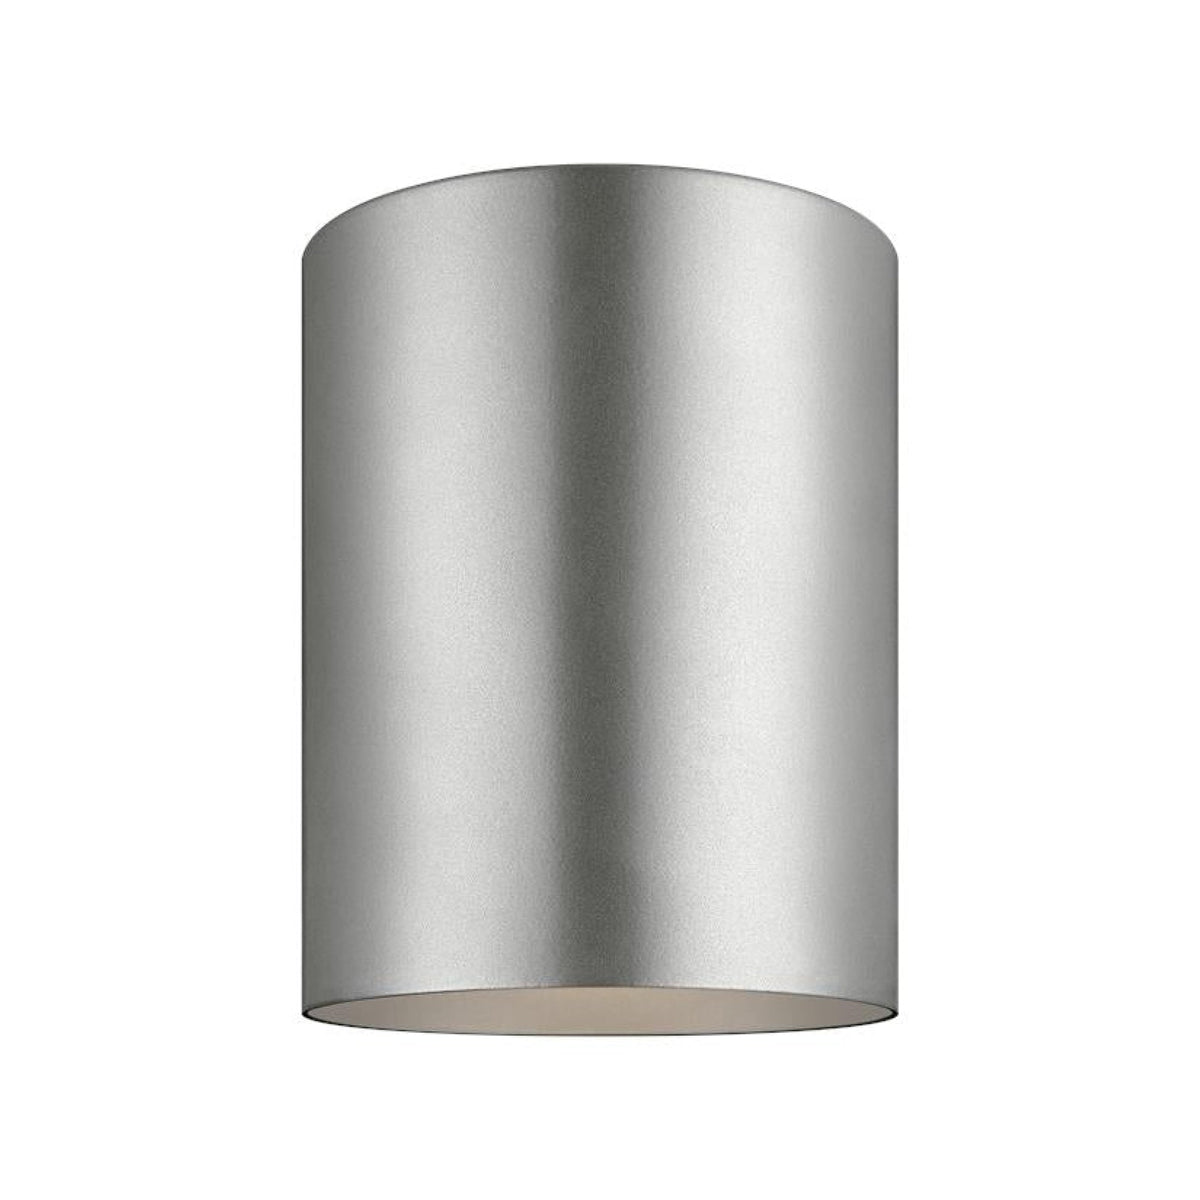 Generation Lighting Outdoor Cylinder LED Flush Mount - Small 7813897S-753 Coastal Lighting